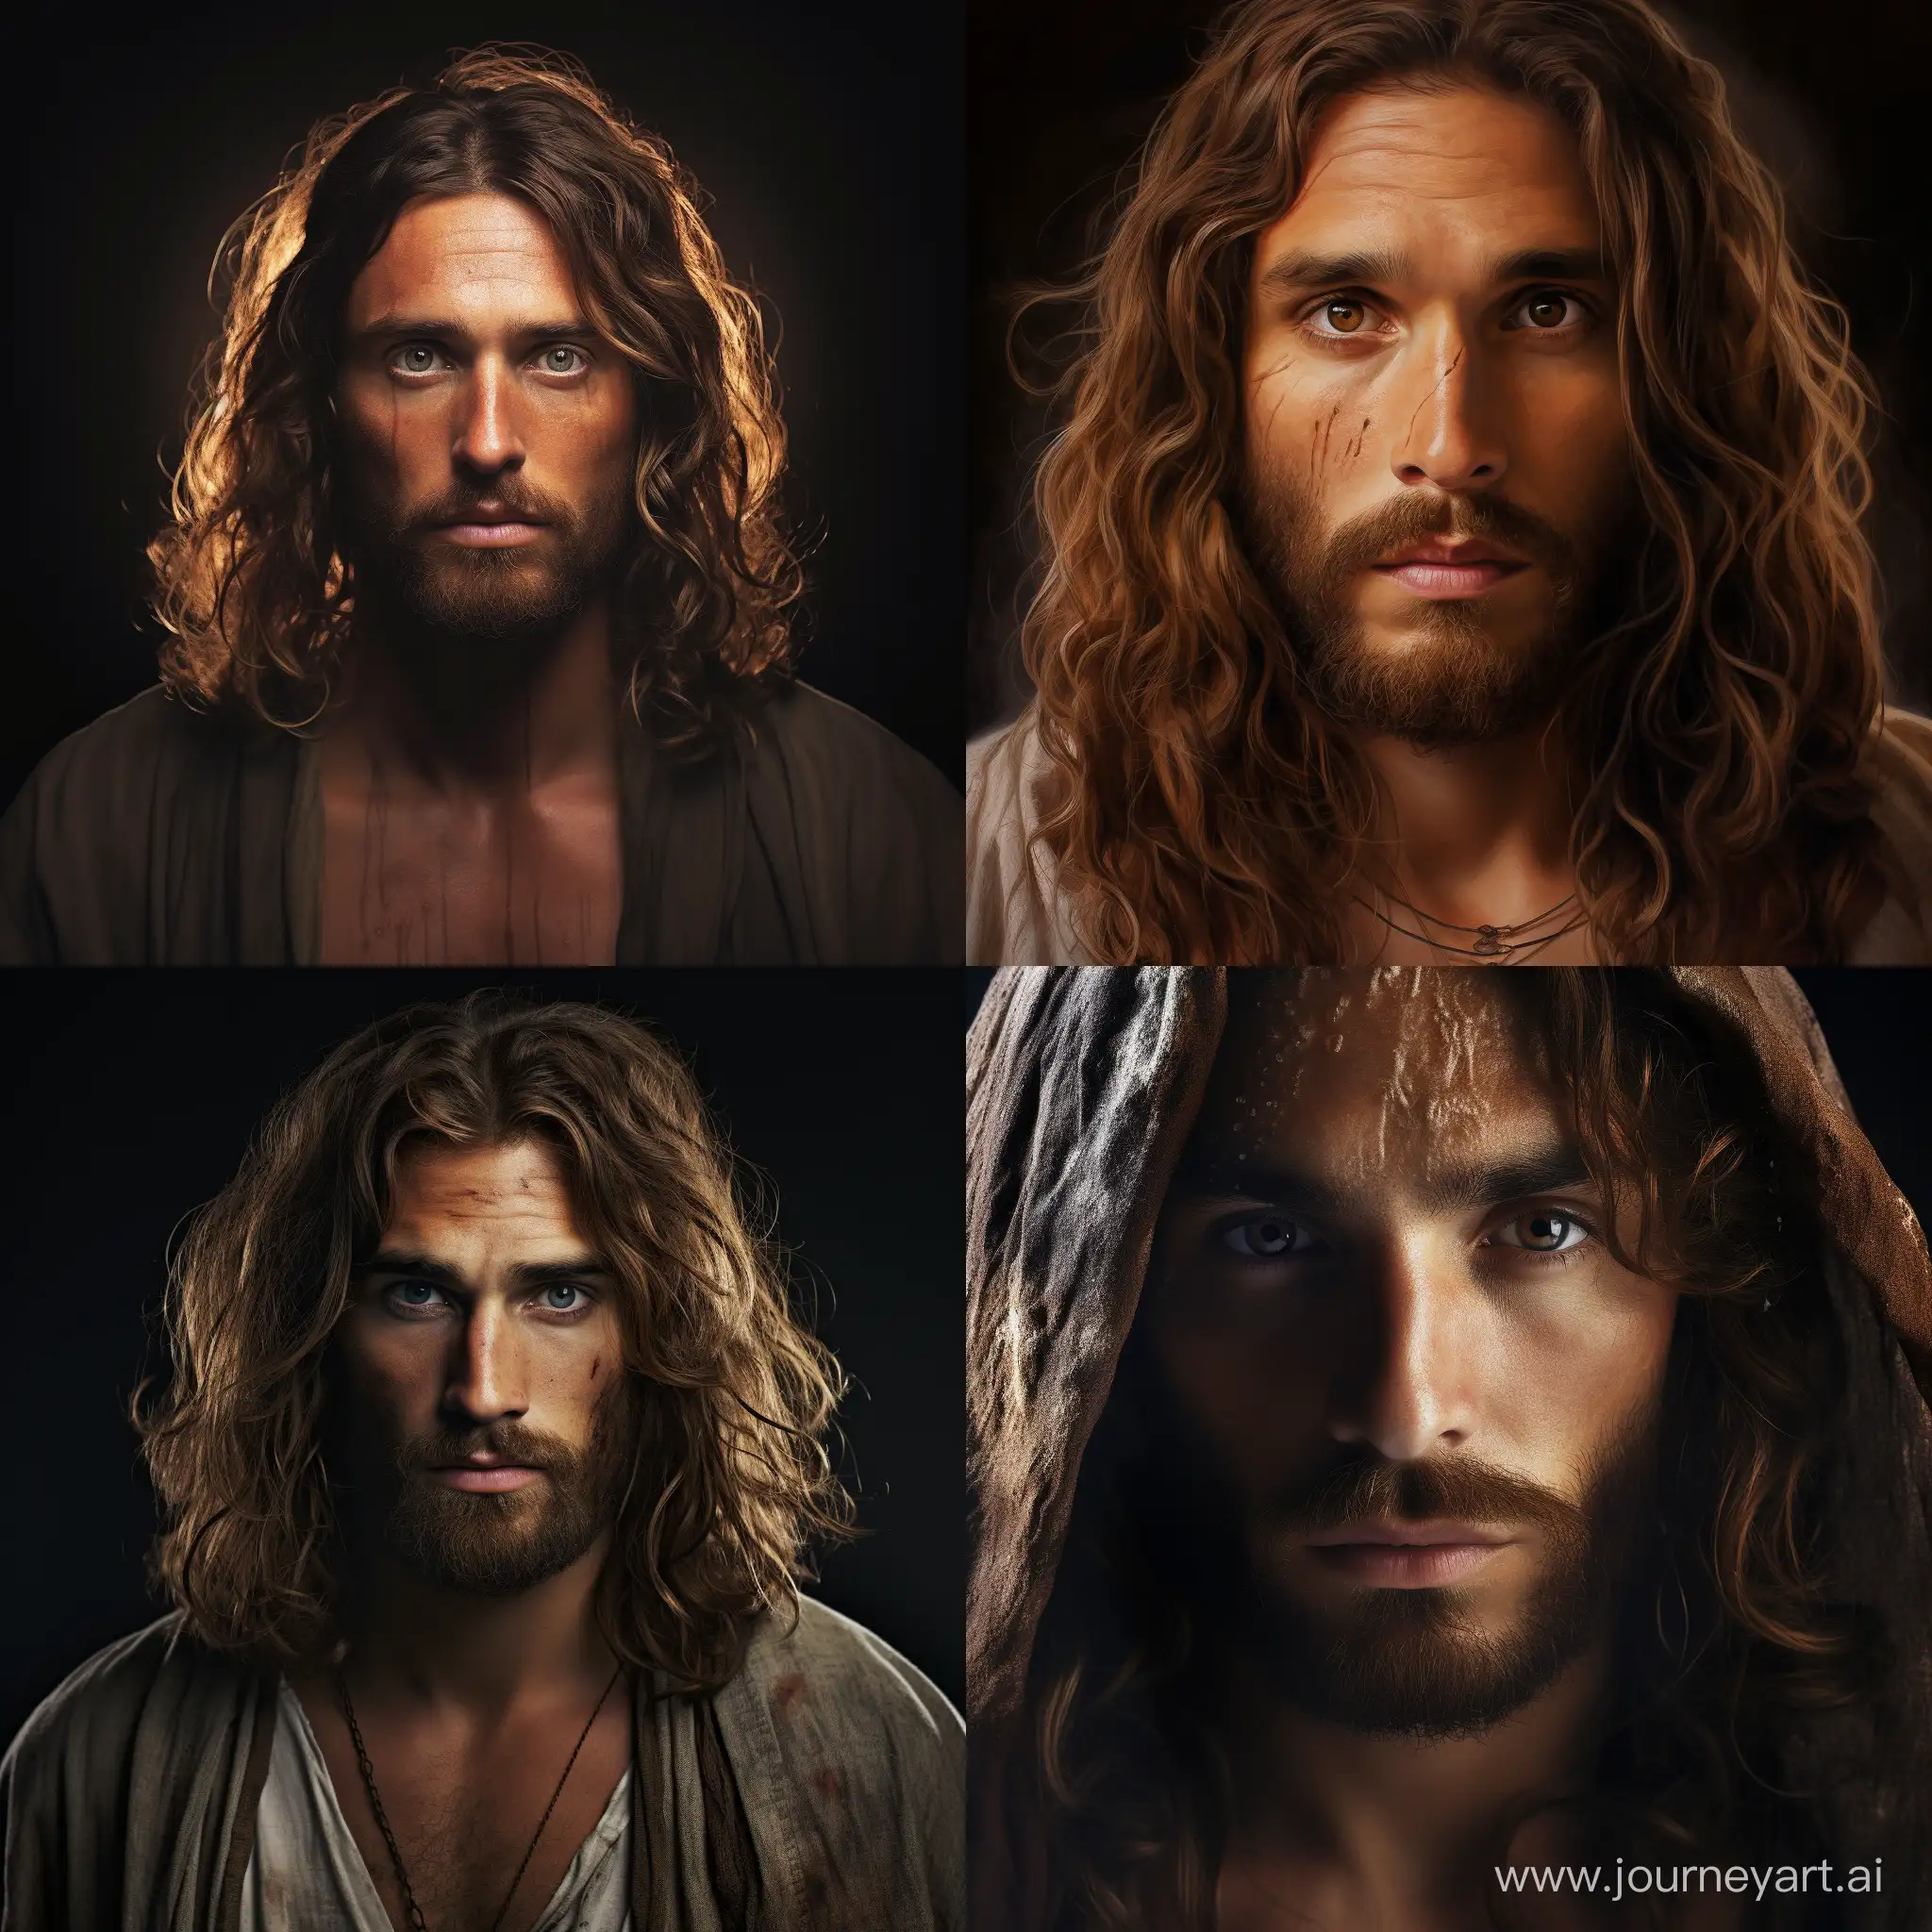 Sacred-Jesus-Christ-Face-Portrait-in-11-Aspect-Ratio